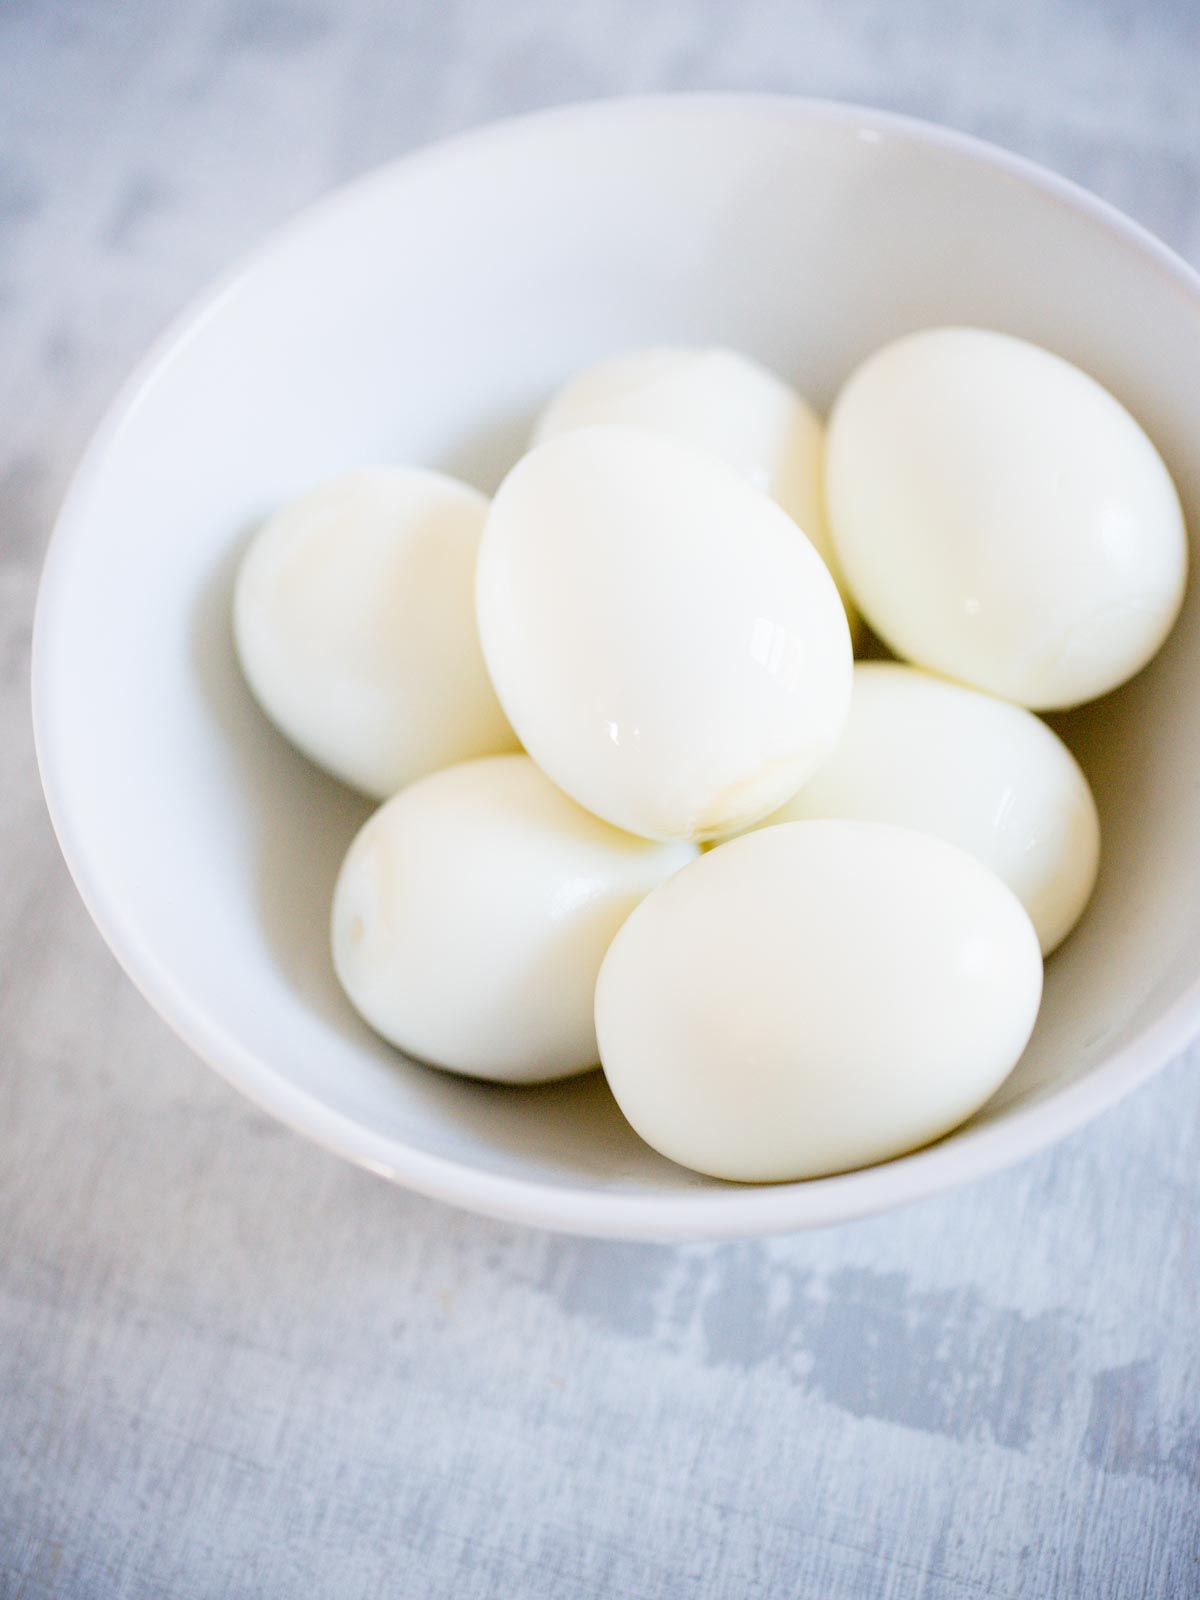 peeled hard boiled eggs in white bowl